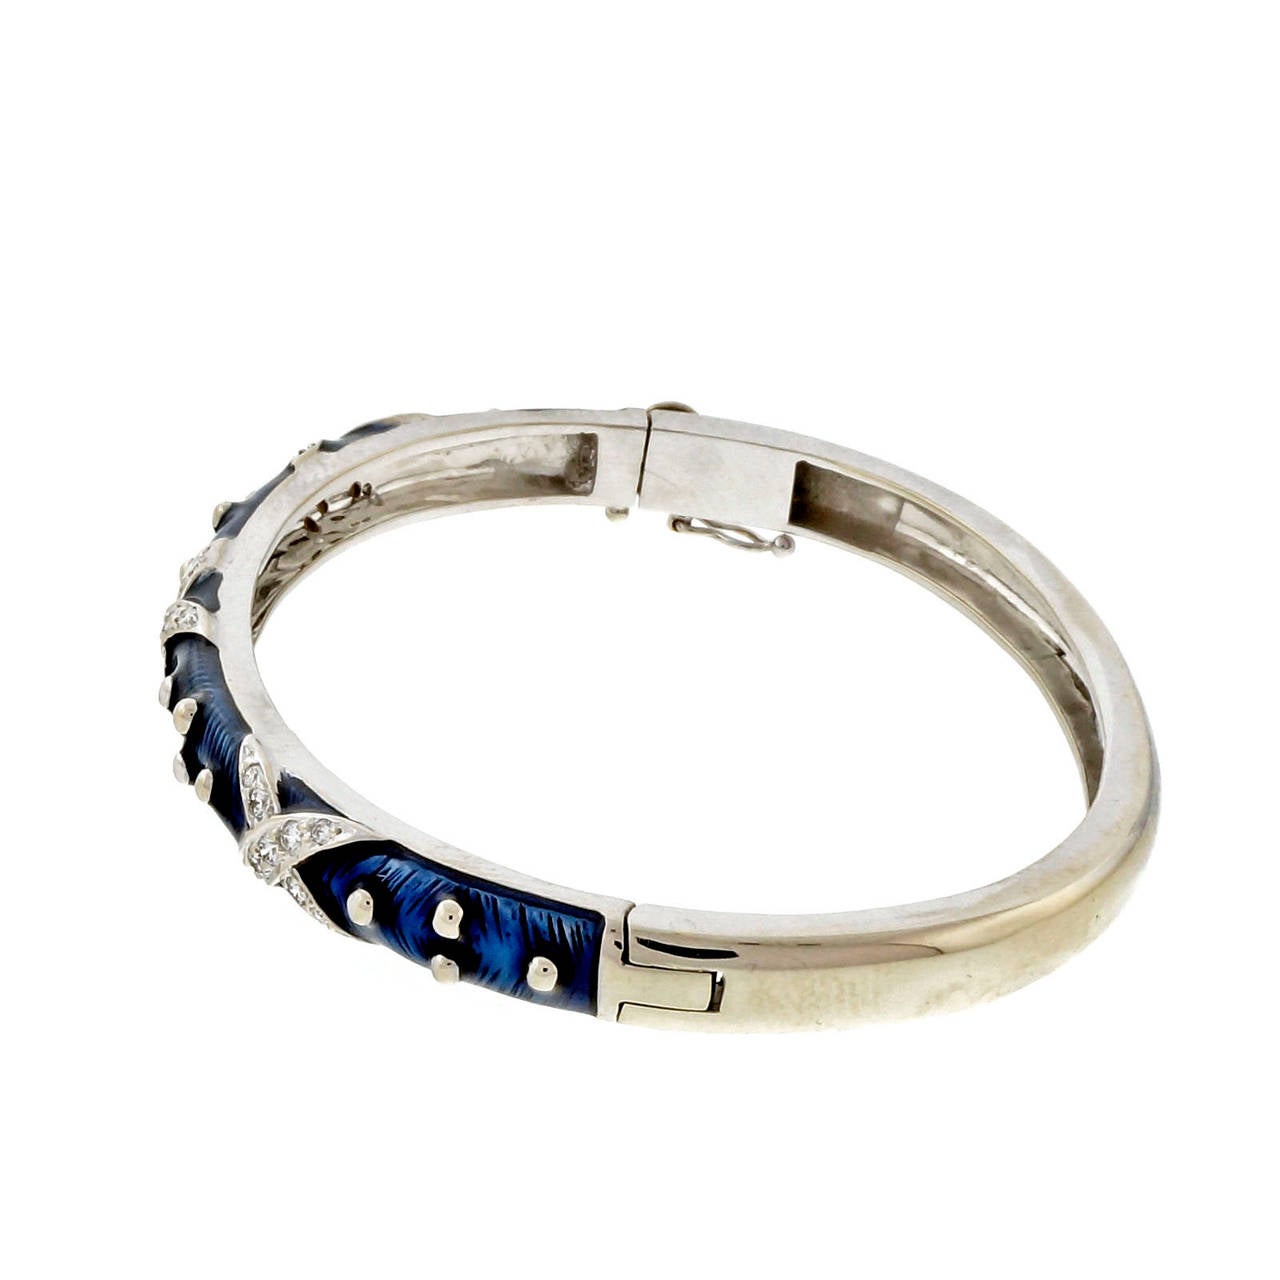 Hidalgo 18k white gold blue enamel “XX” design diamond hinged bangle bracelet. No damage to enamel.

27 round diamonds, approx. total weight .75cts, H, VS – SI
18k white gold
Tested: 18k
Stamped: 750
Hallmark: Hidalgo
23.9 grams
Width: